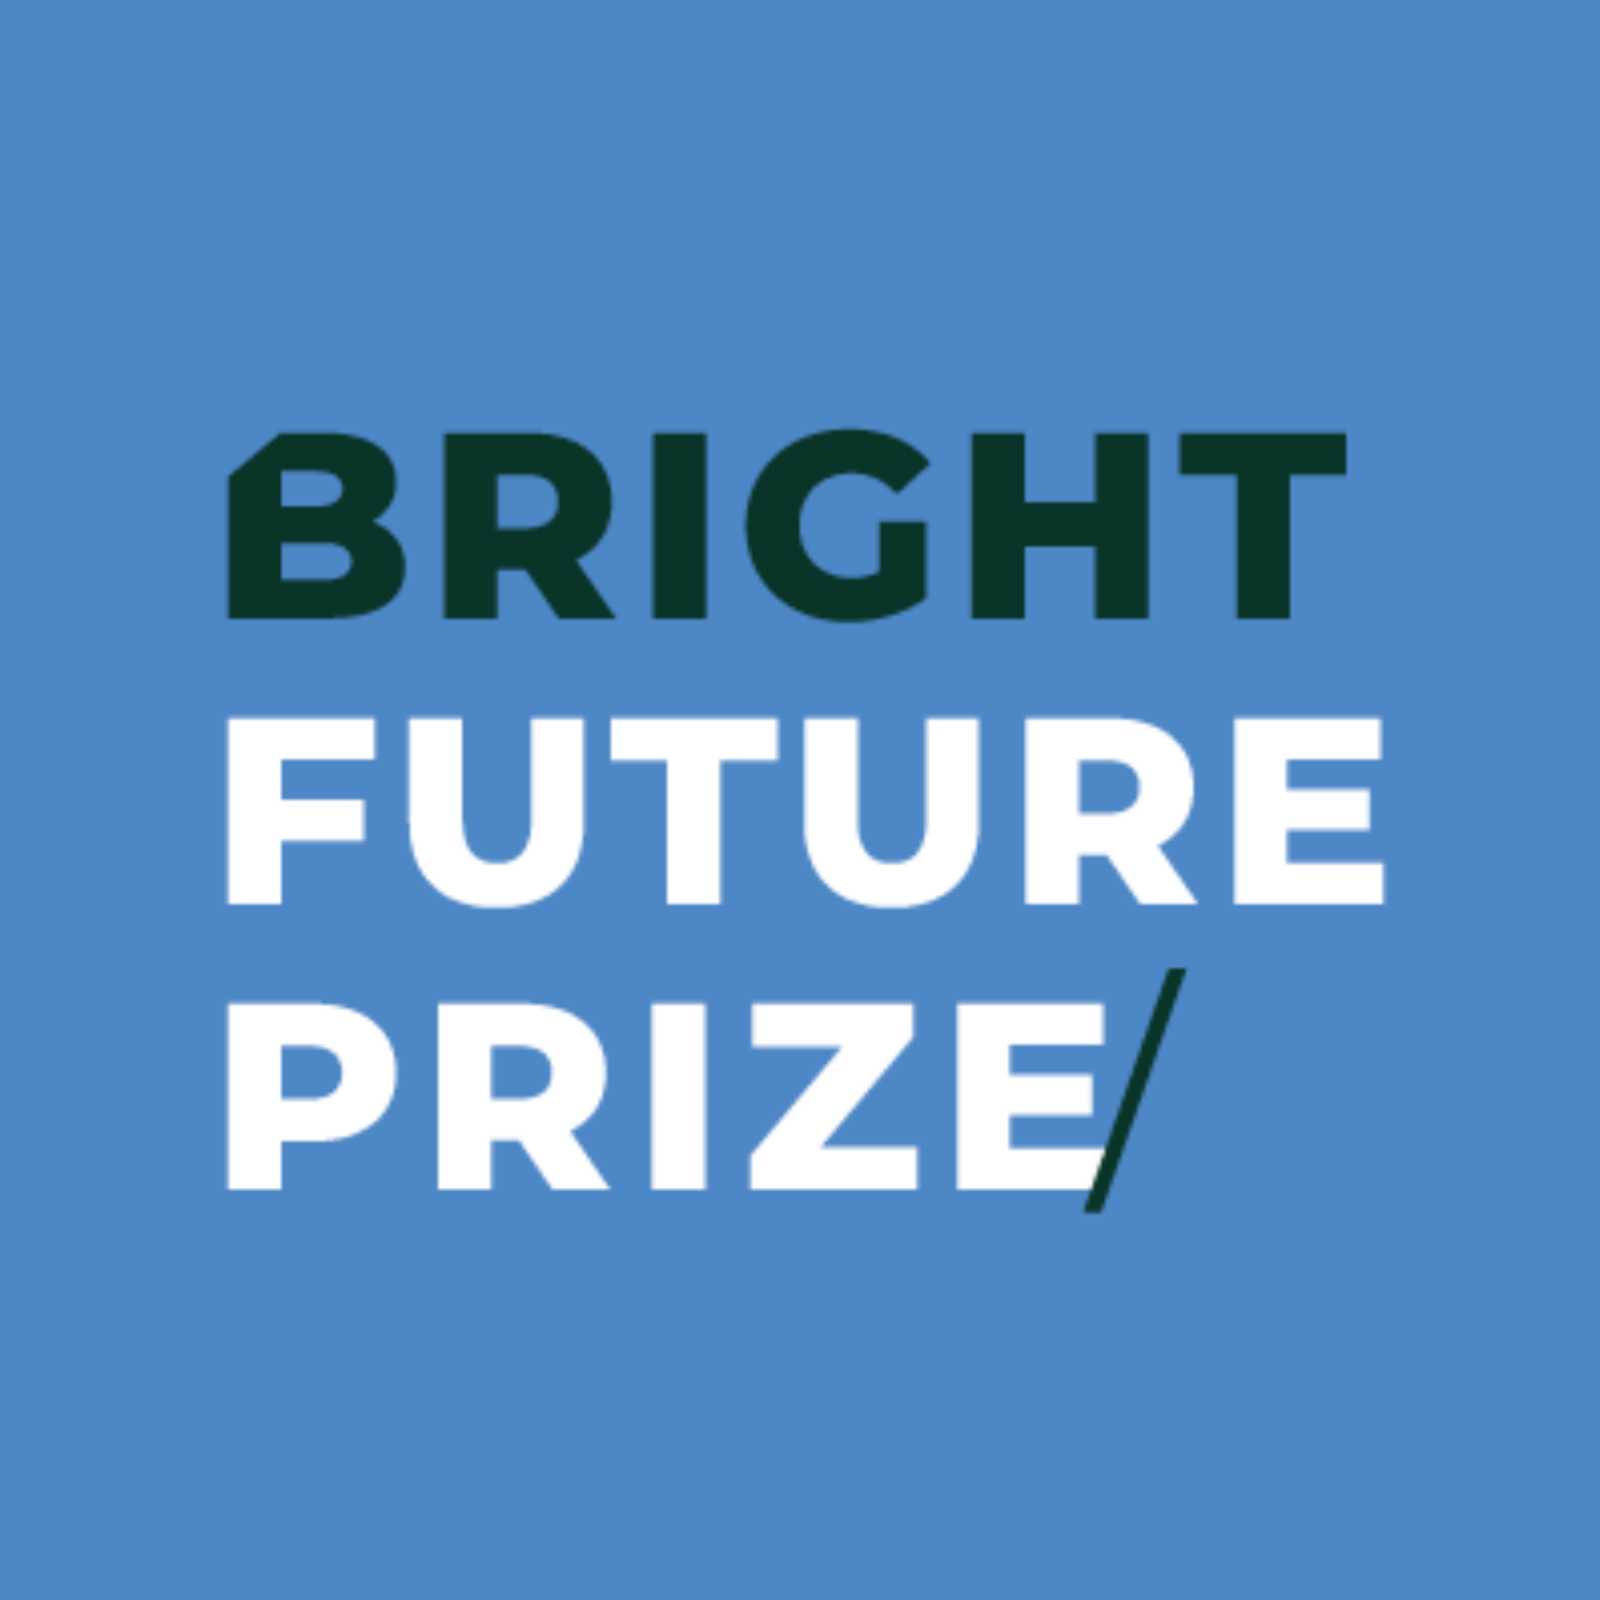 Bright Future Prize logo on blue background